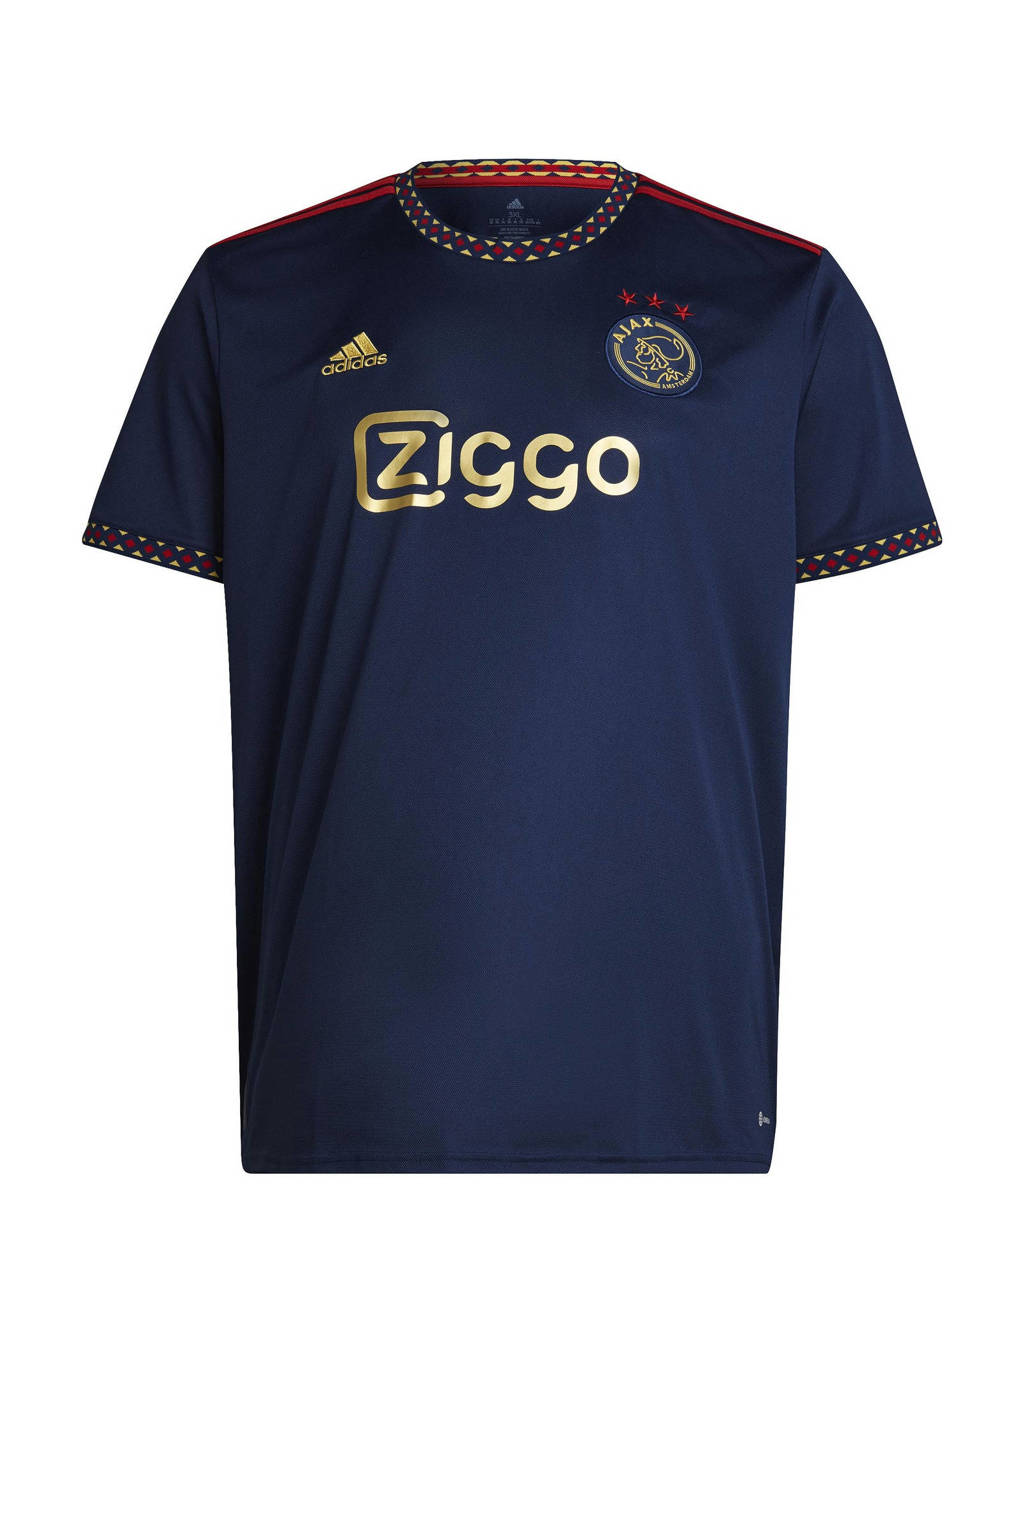 Slecht Stationair Markeer adidas Performance Senior Ajax Amsterdam voetbalshirt uit | wehkamp